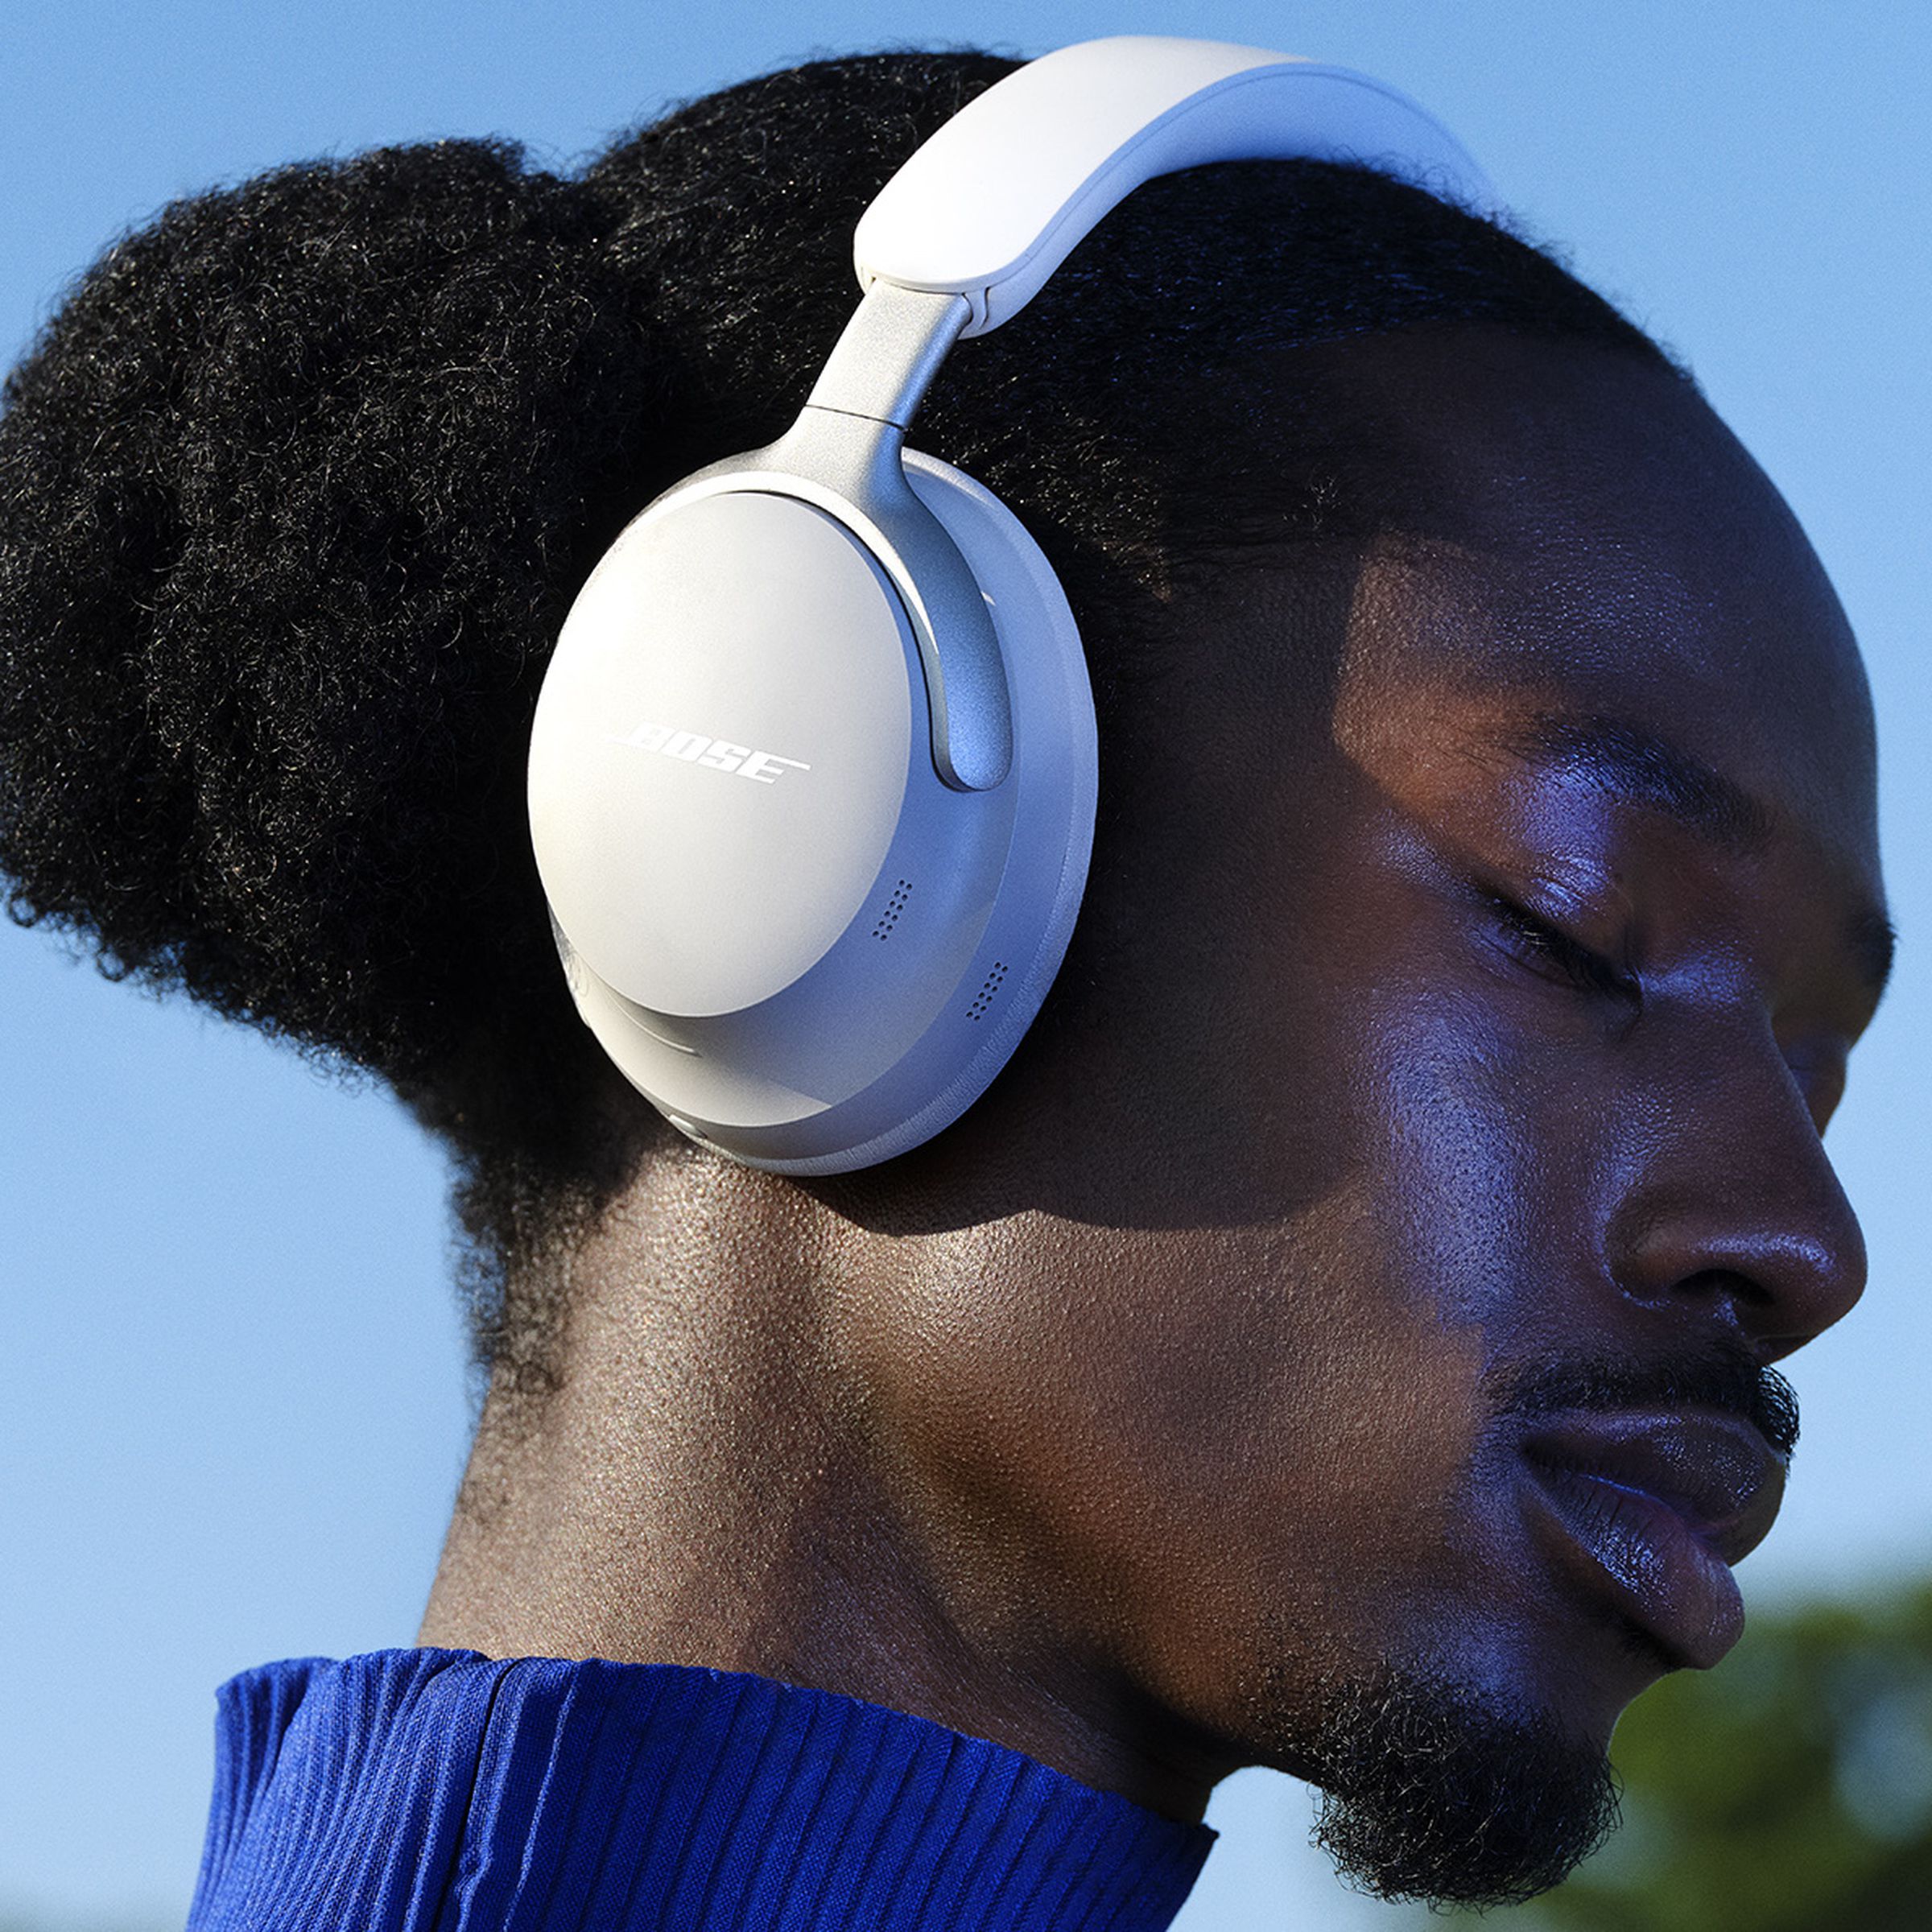 A marketing image of Bose’s QuietComfort Ultra Headphones.